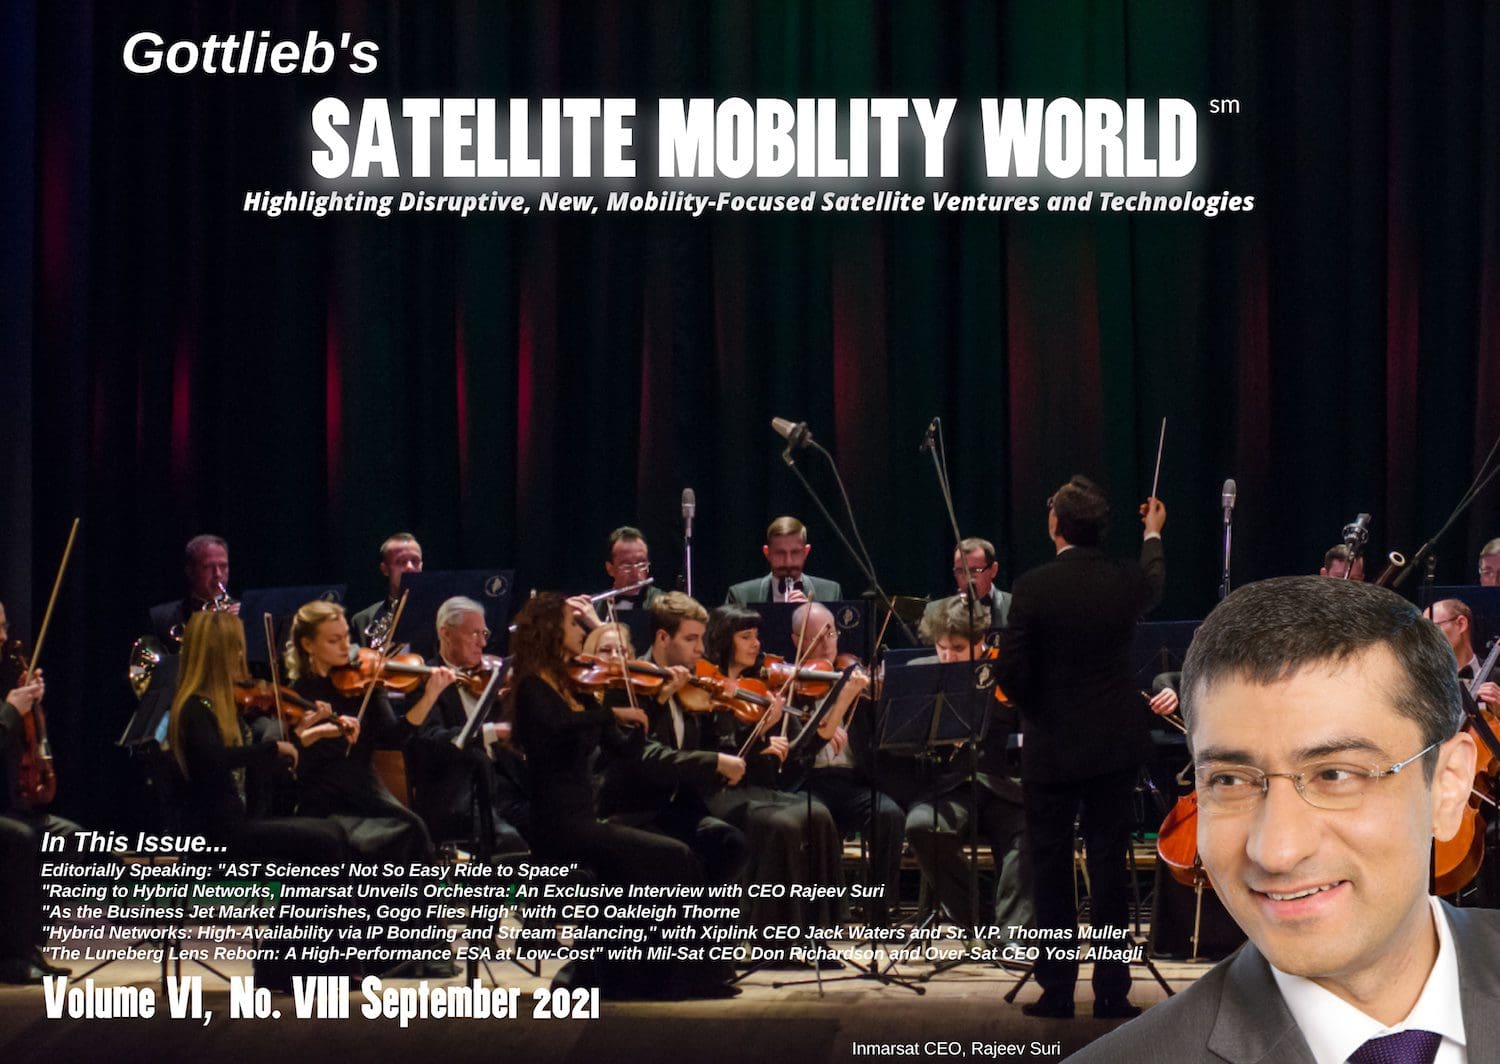 Gottlieb's Satellite Mobility World copy